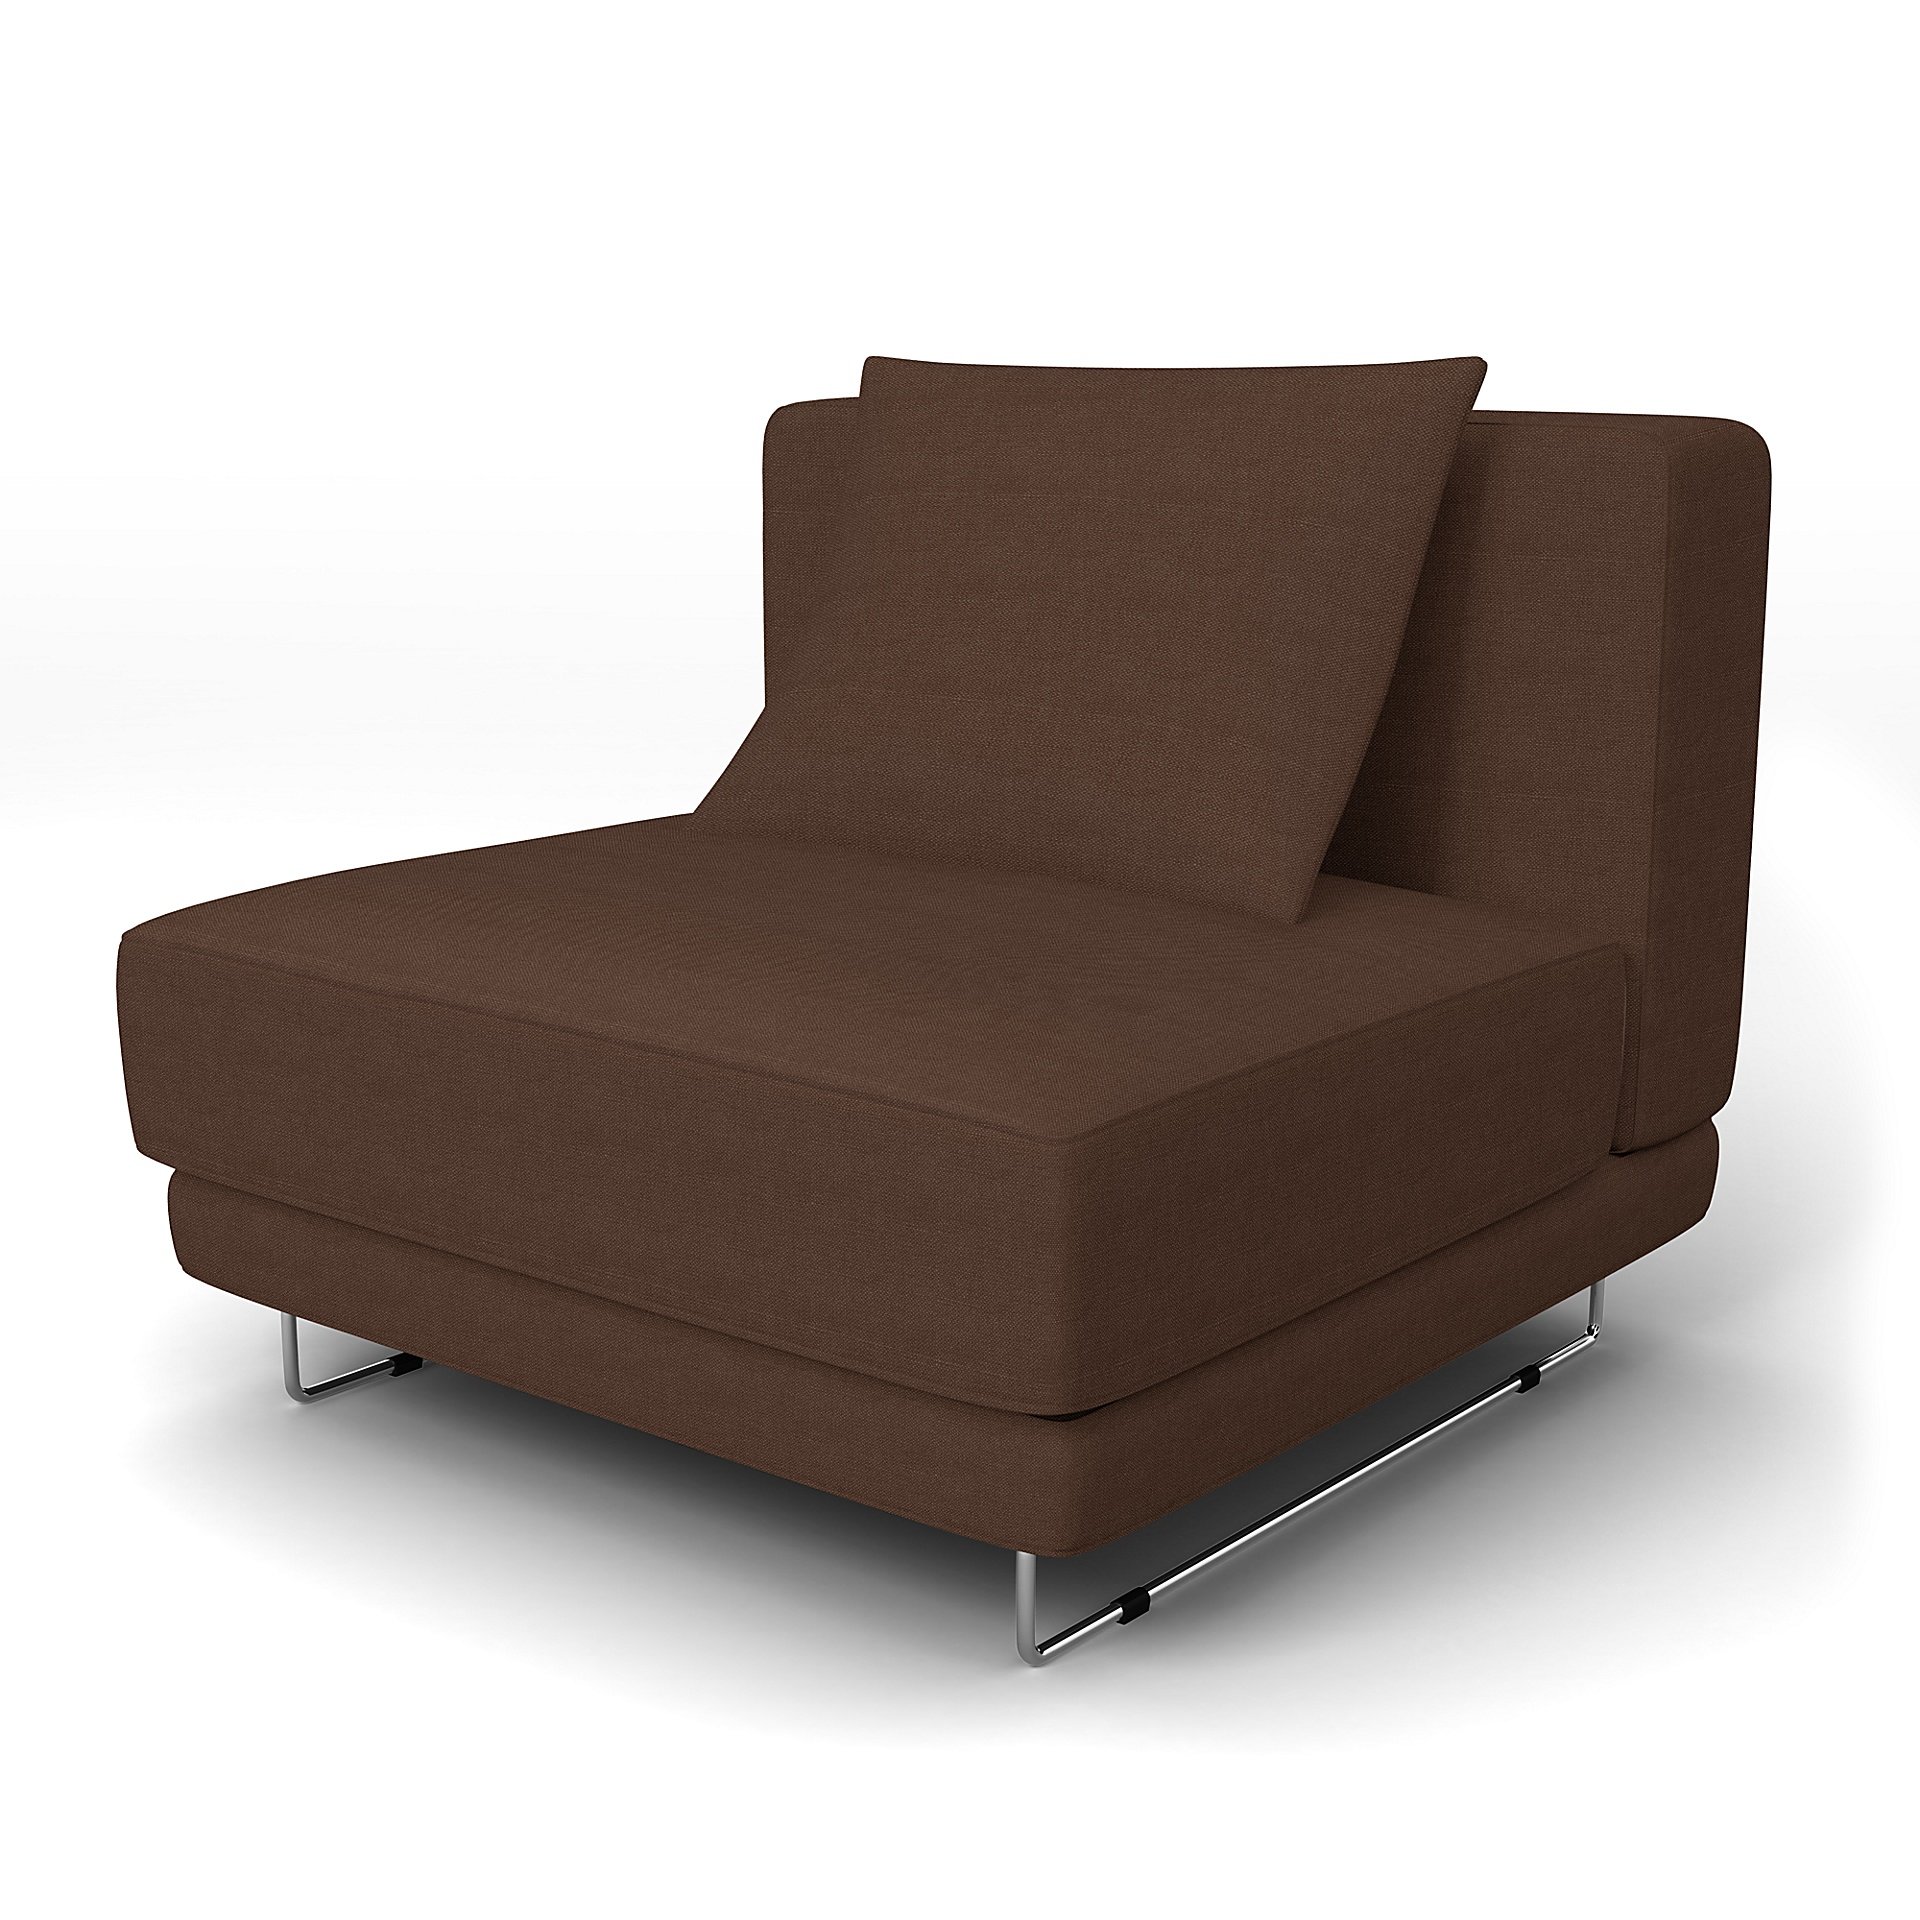 IKEA - Tylosand 1 Seat Module Cover, Chocolate, Linen - Bemz